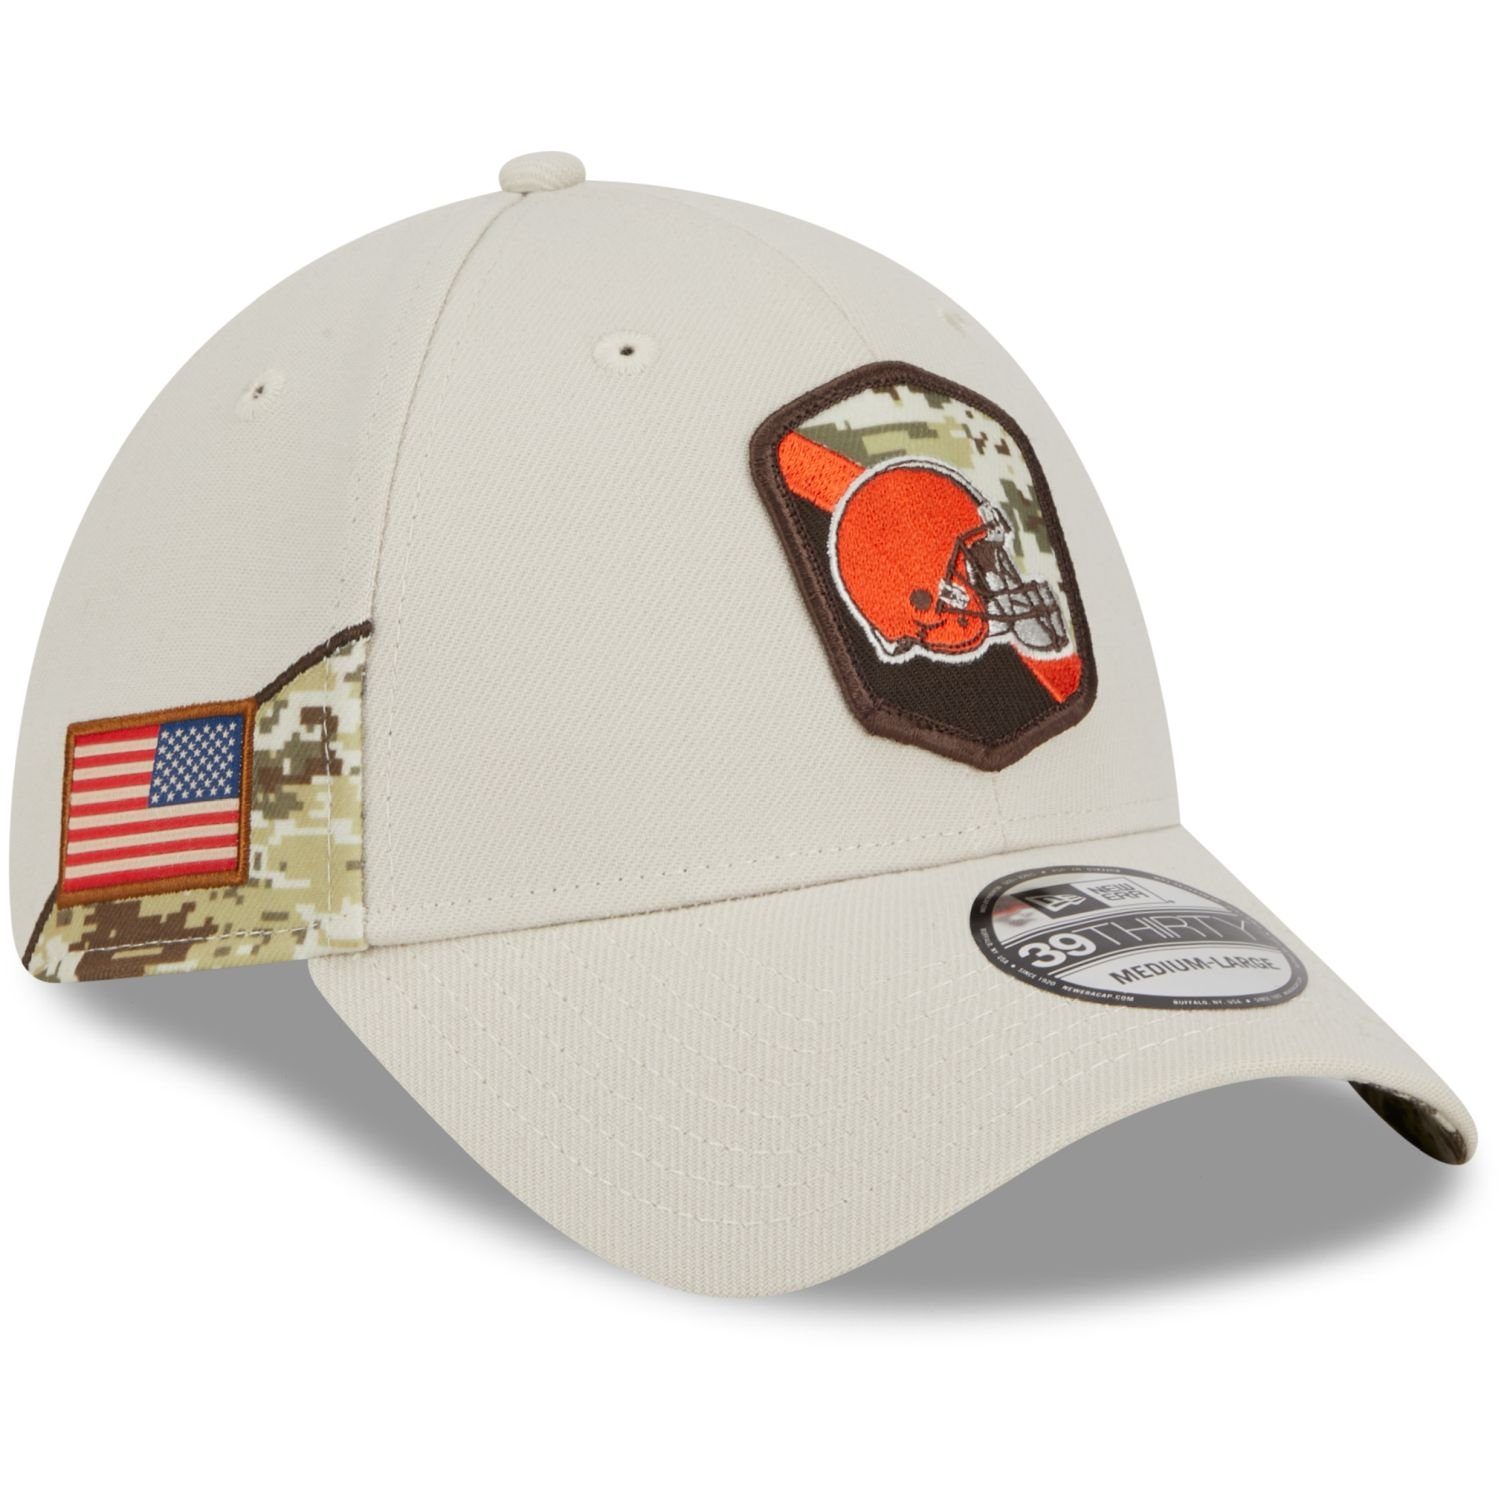 New Era Flex Cap 39Thirty StretchFit NFL Salute to Service Cleveland Browns